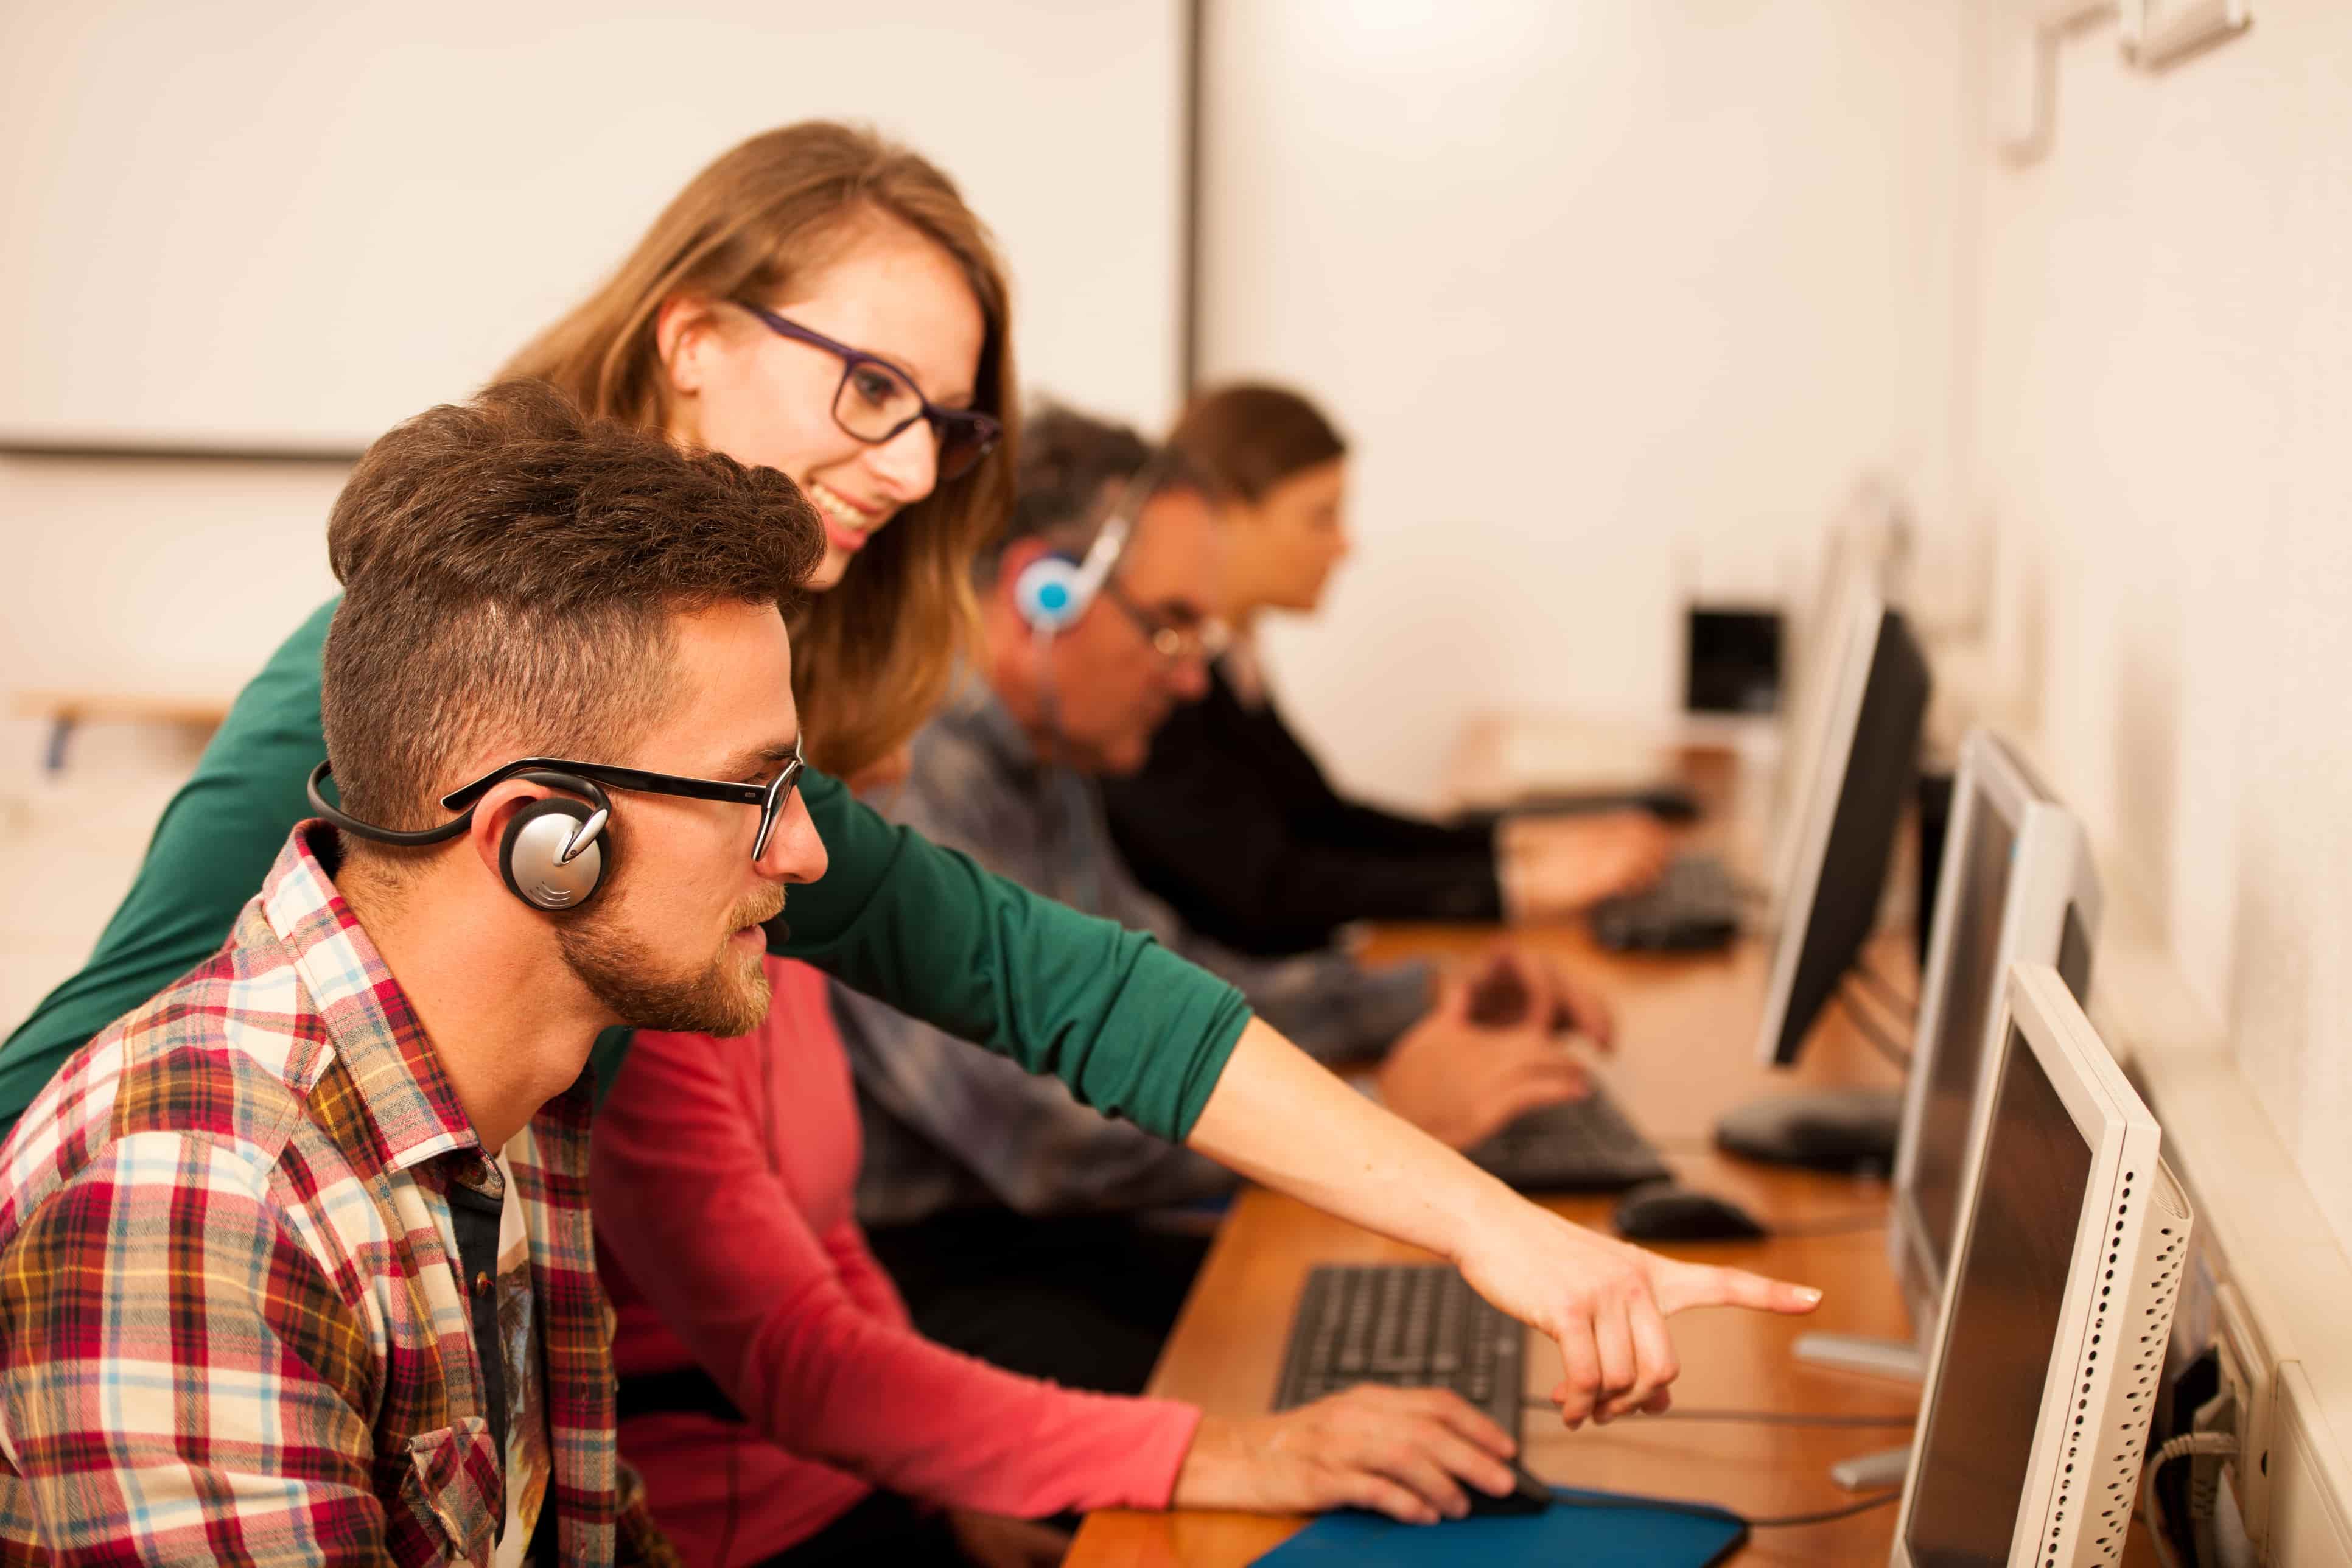 Students at learning at computers